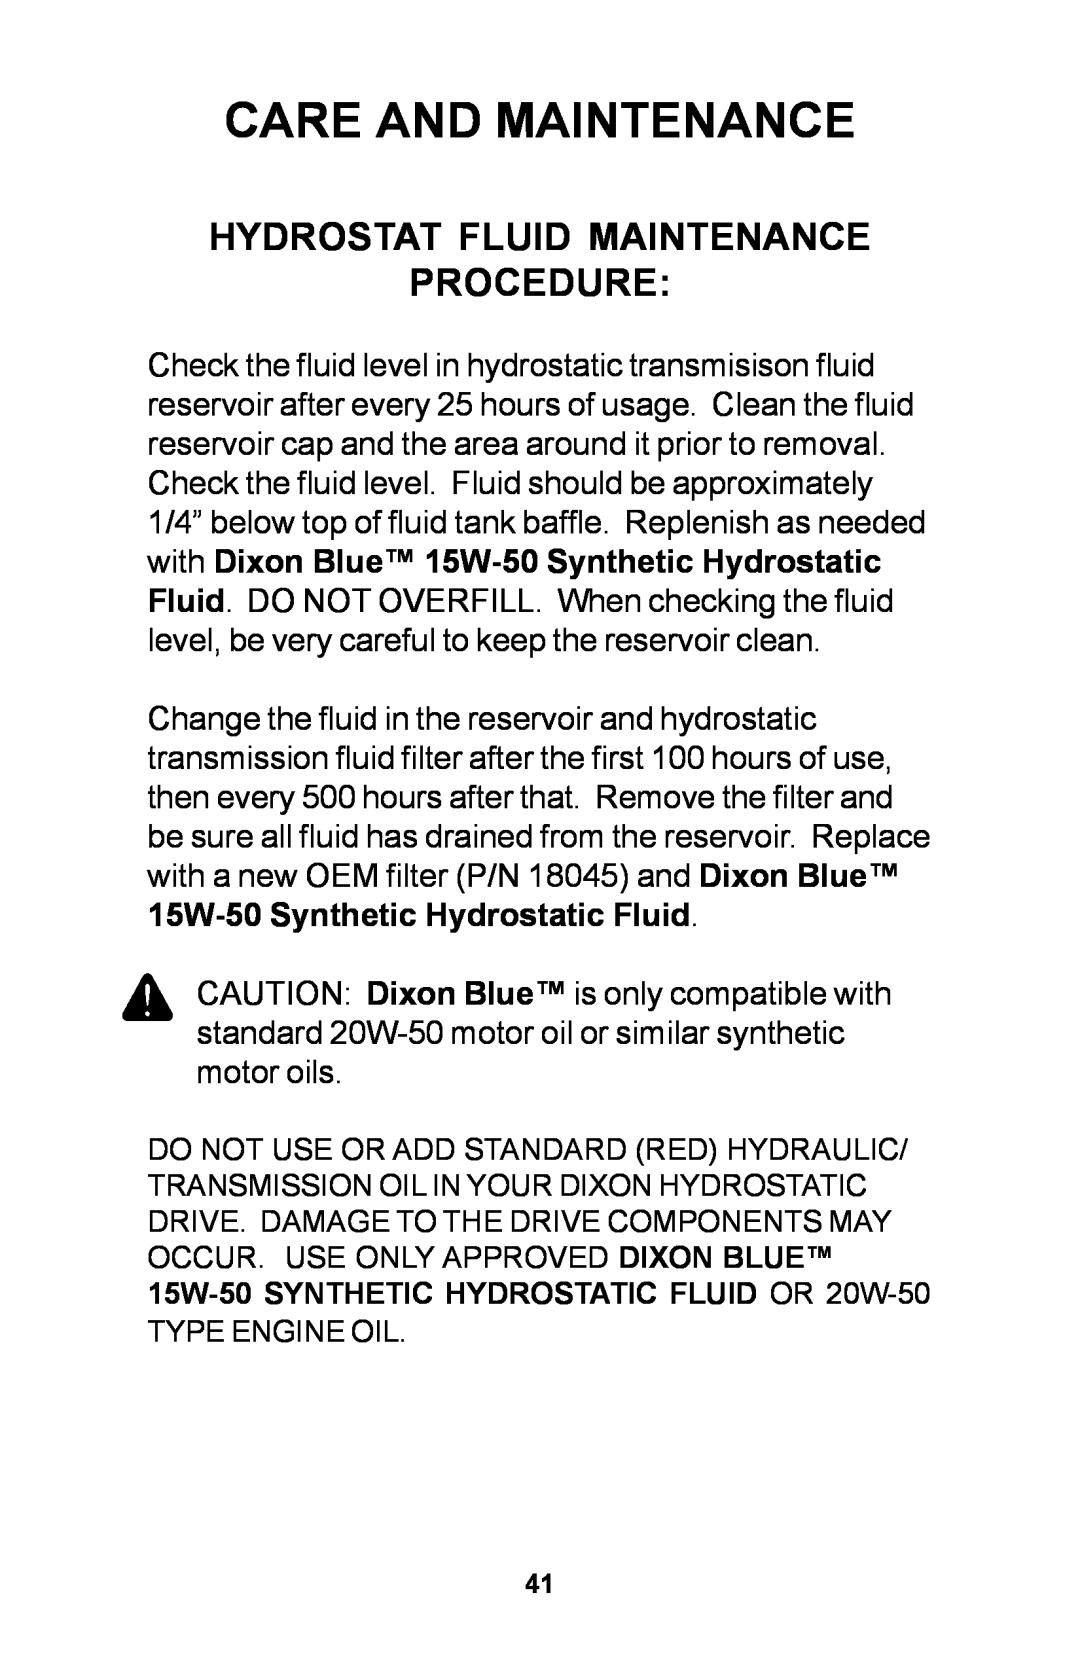 Dixon ZTR manual Hydrostat Fluid Maintenance Procedure, Care And Maintenance, 15W-50 SYNTHETIC HYDROSTATIC FLUID OR 20W-50 